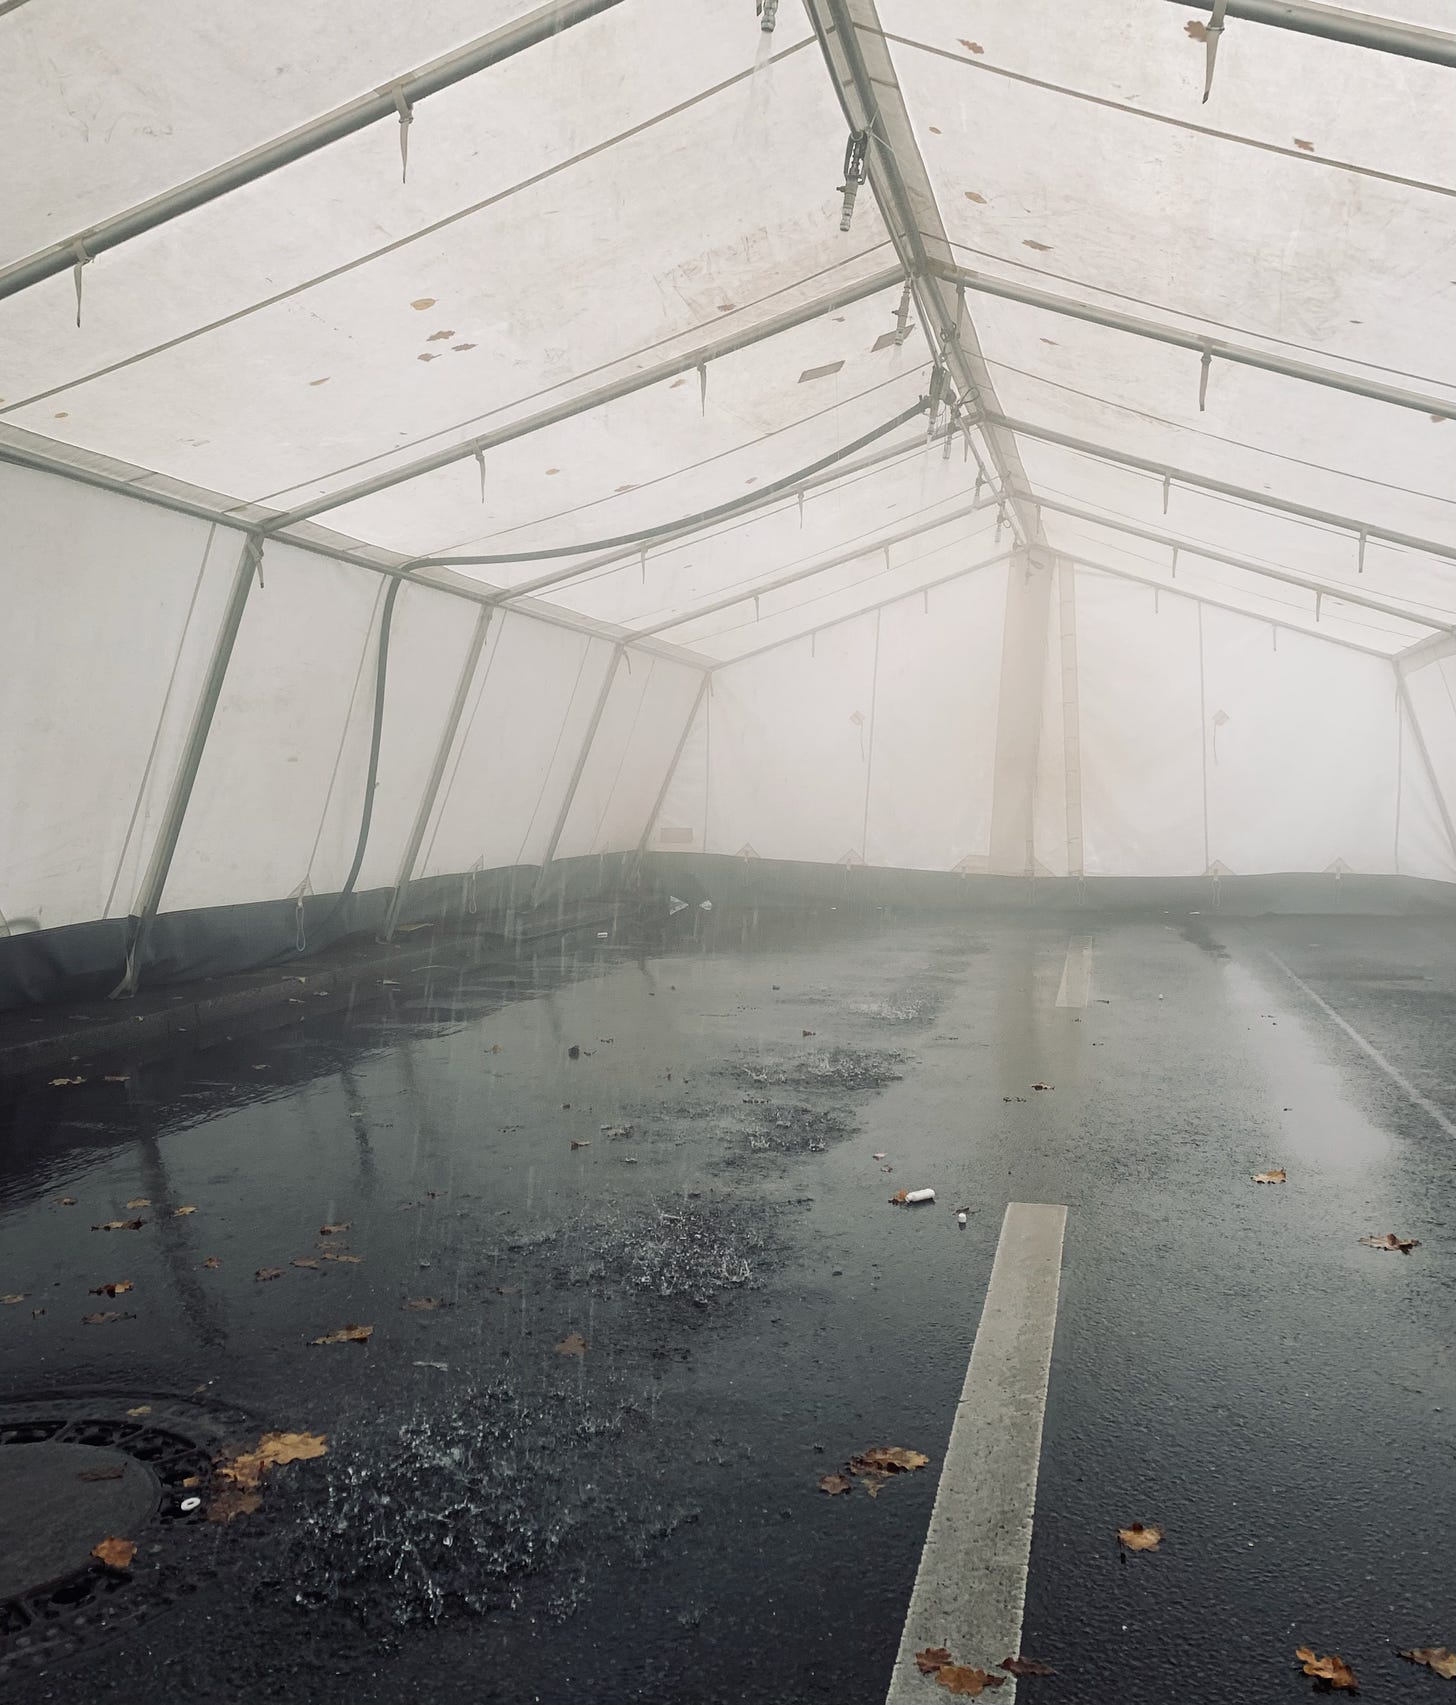 empty showering tent at the berlin marathon 2019